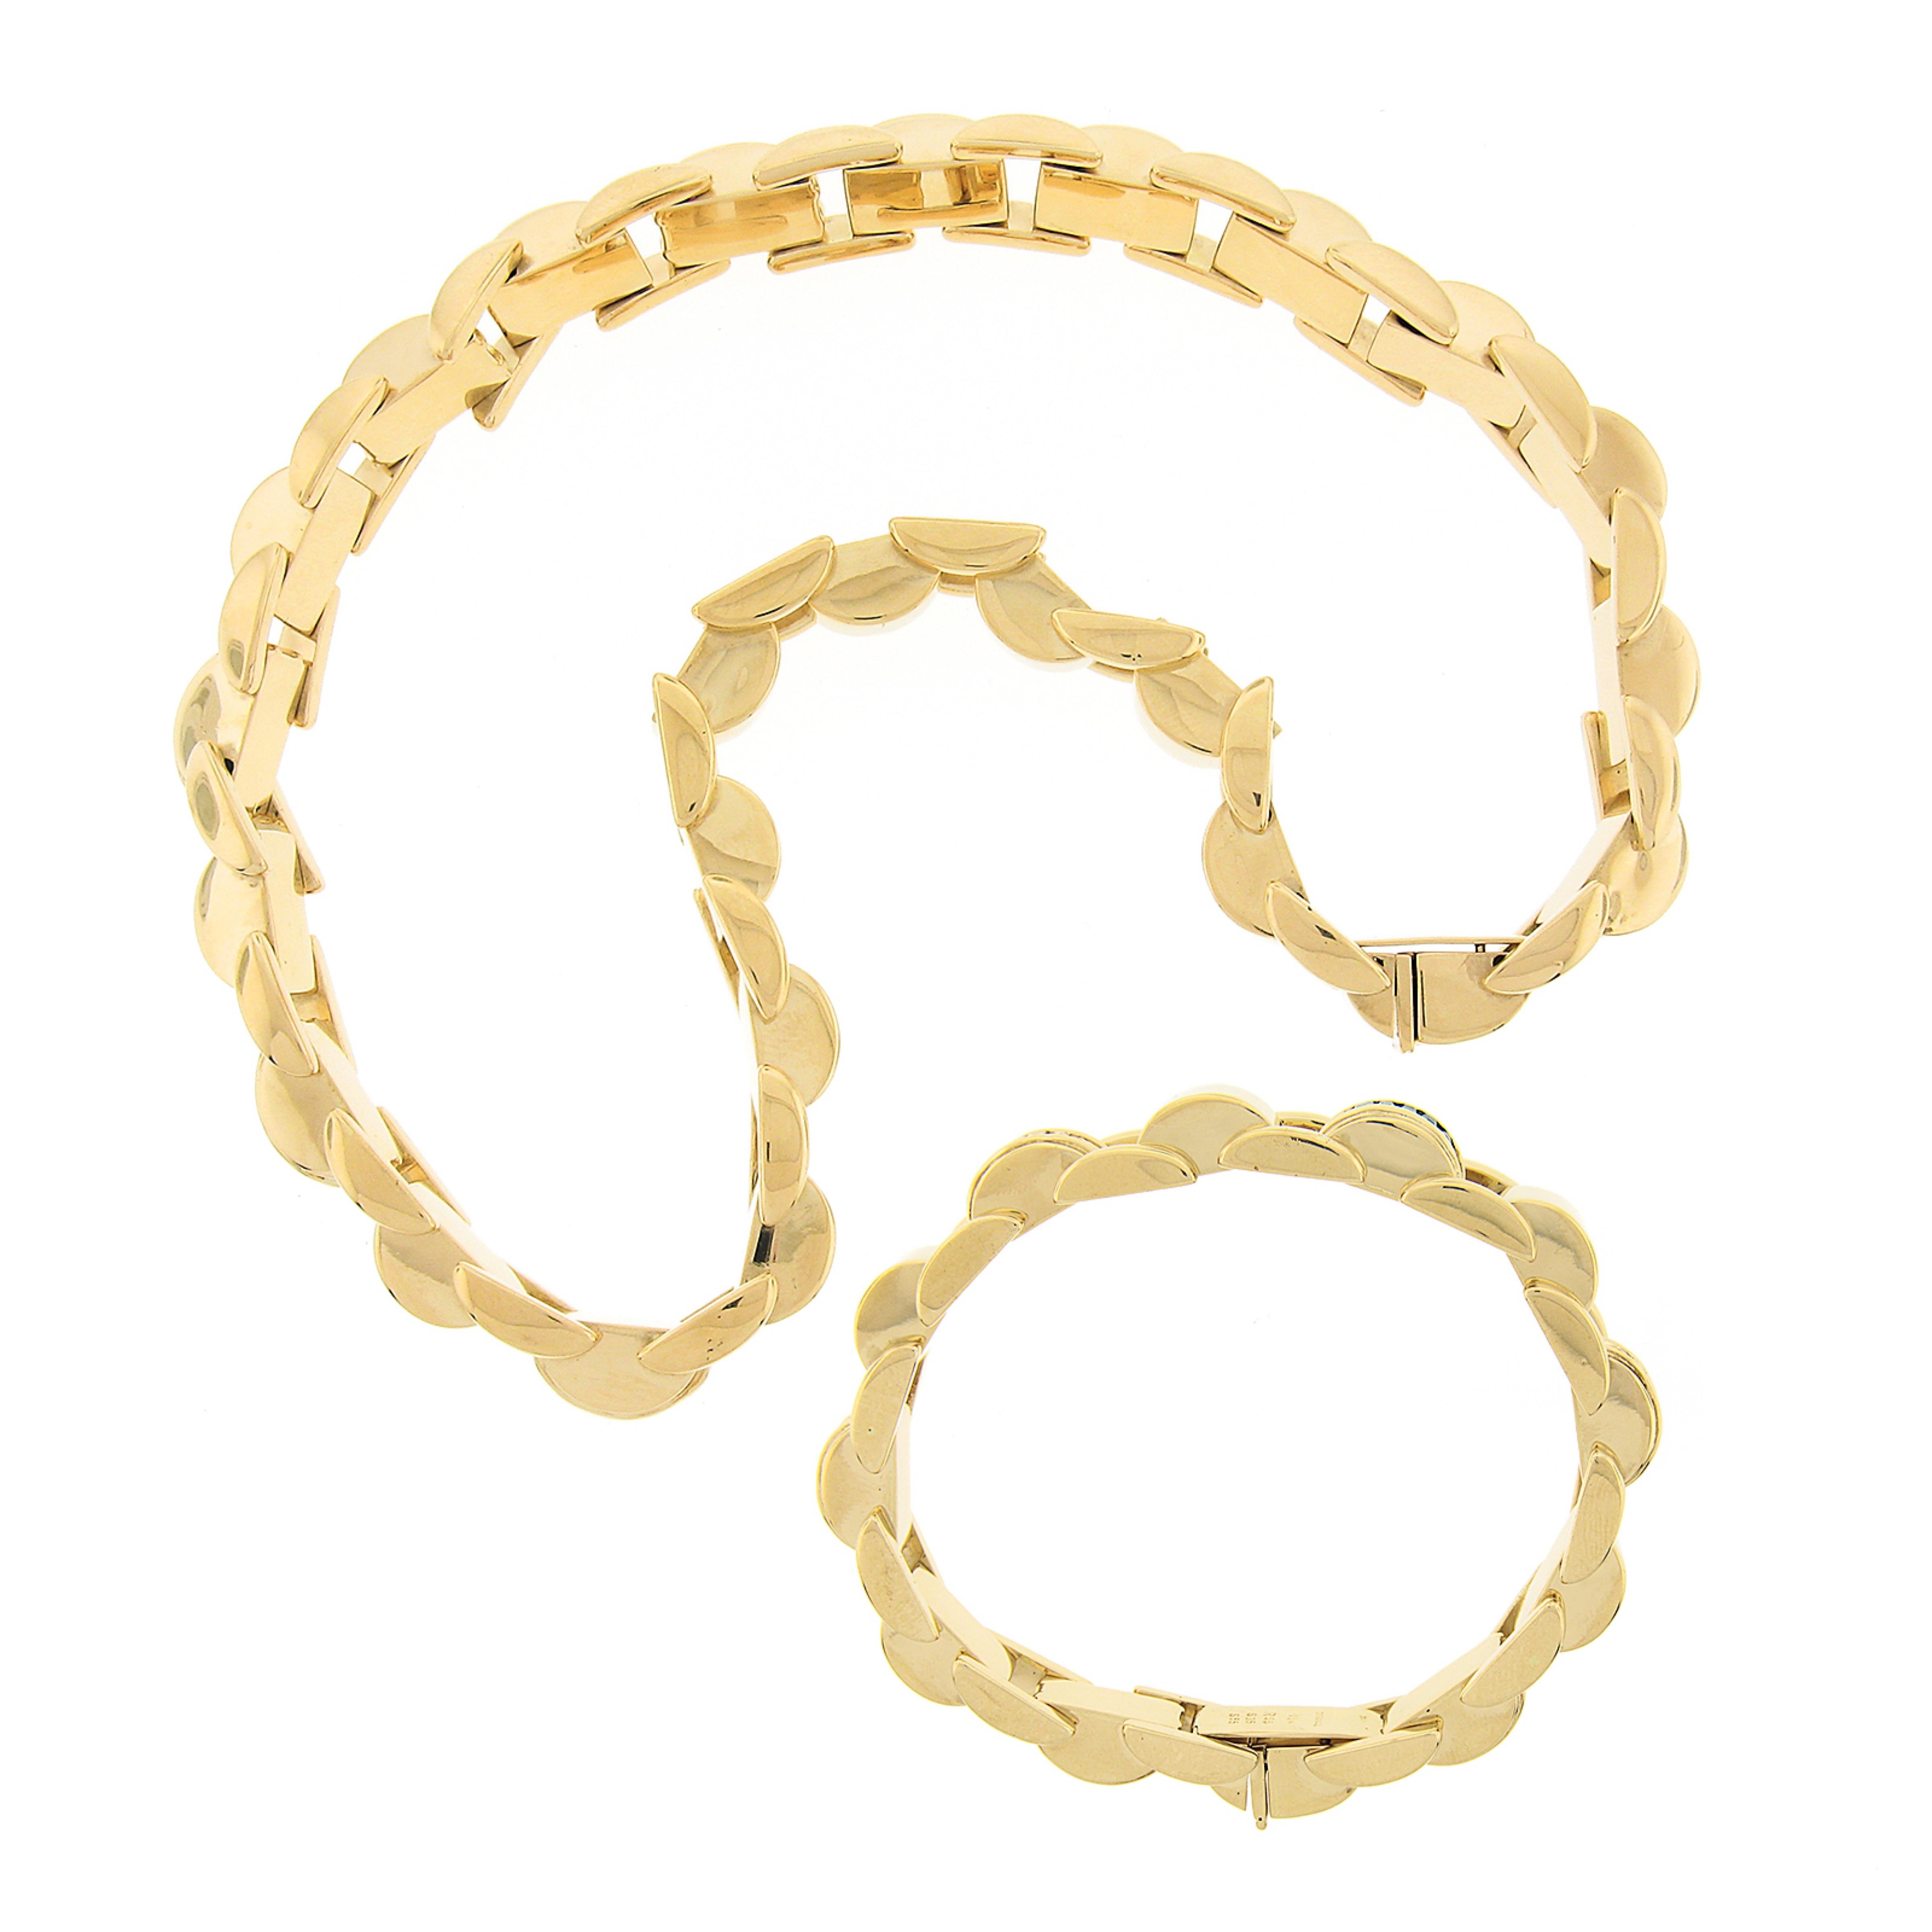 Baguette Cut Vintage Tiffany & Co. 18k Gold Diamond Multi Gemstone Link Bracelet Necklace Set